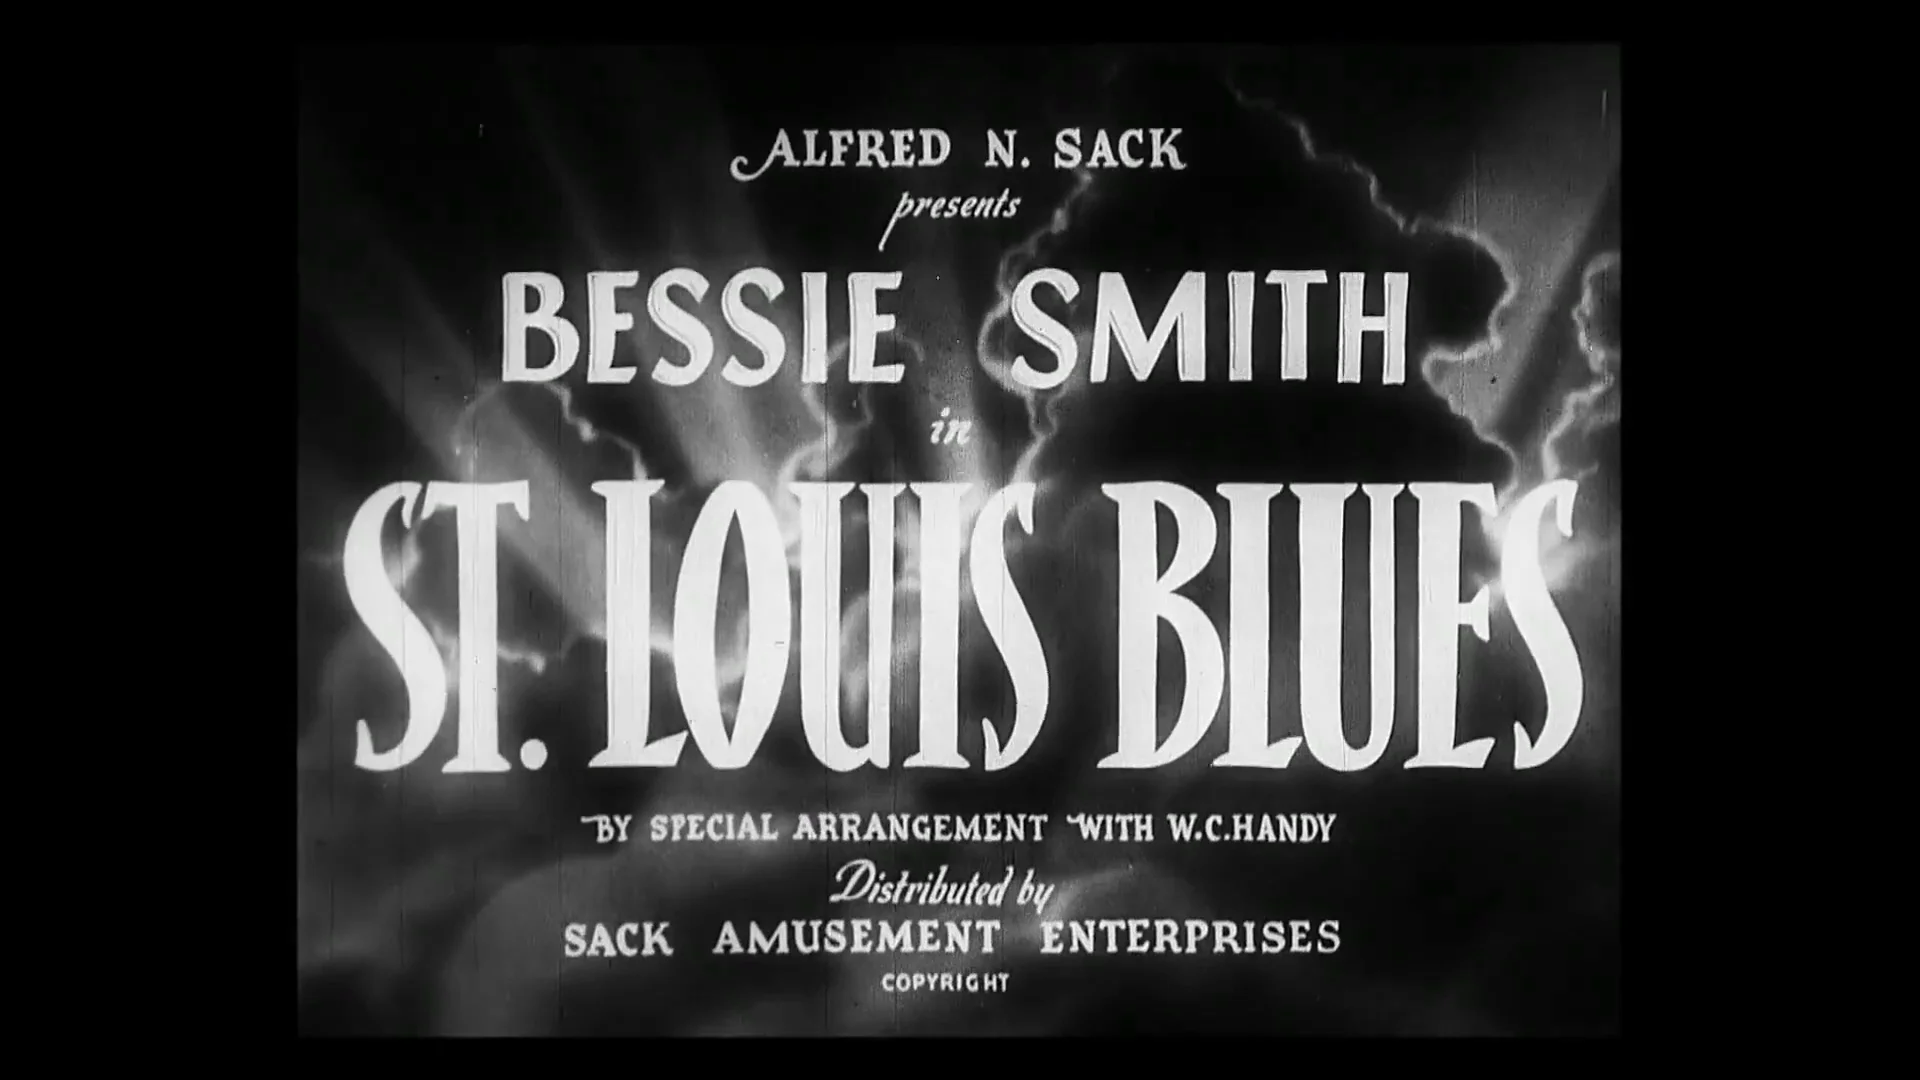 WATCH BESSIE SMITH IN THE 1929 FILM ST LOUIS BLUES FREE ONLINE